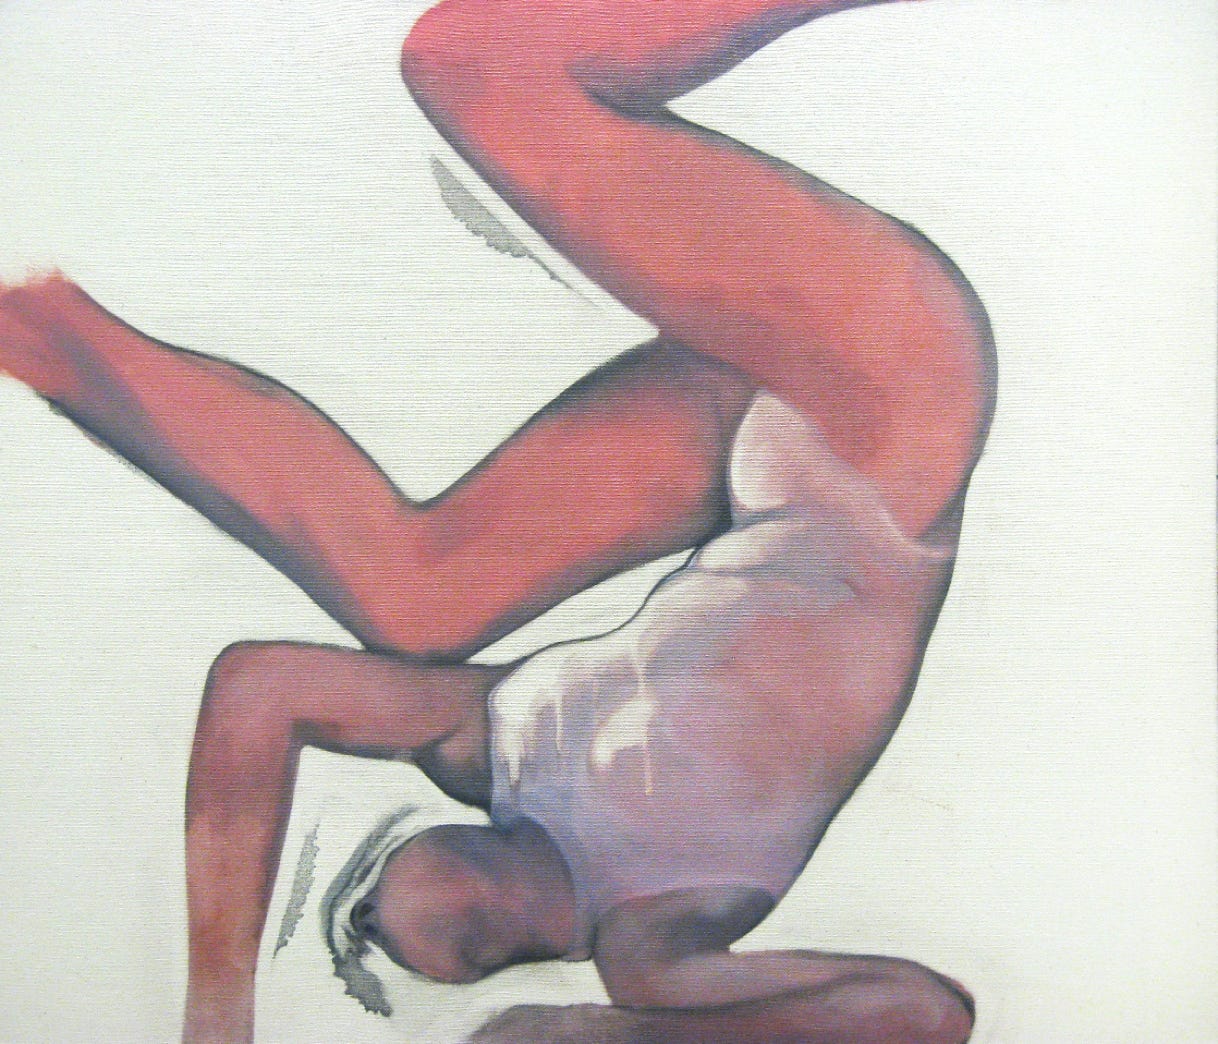 60x70 cm, oil on canvas, 2014